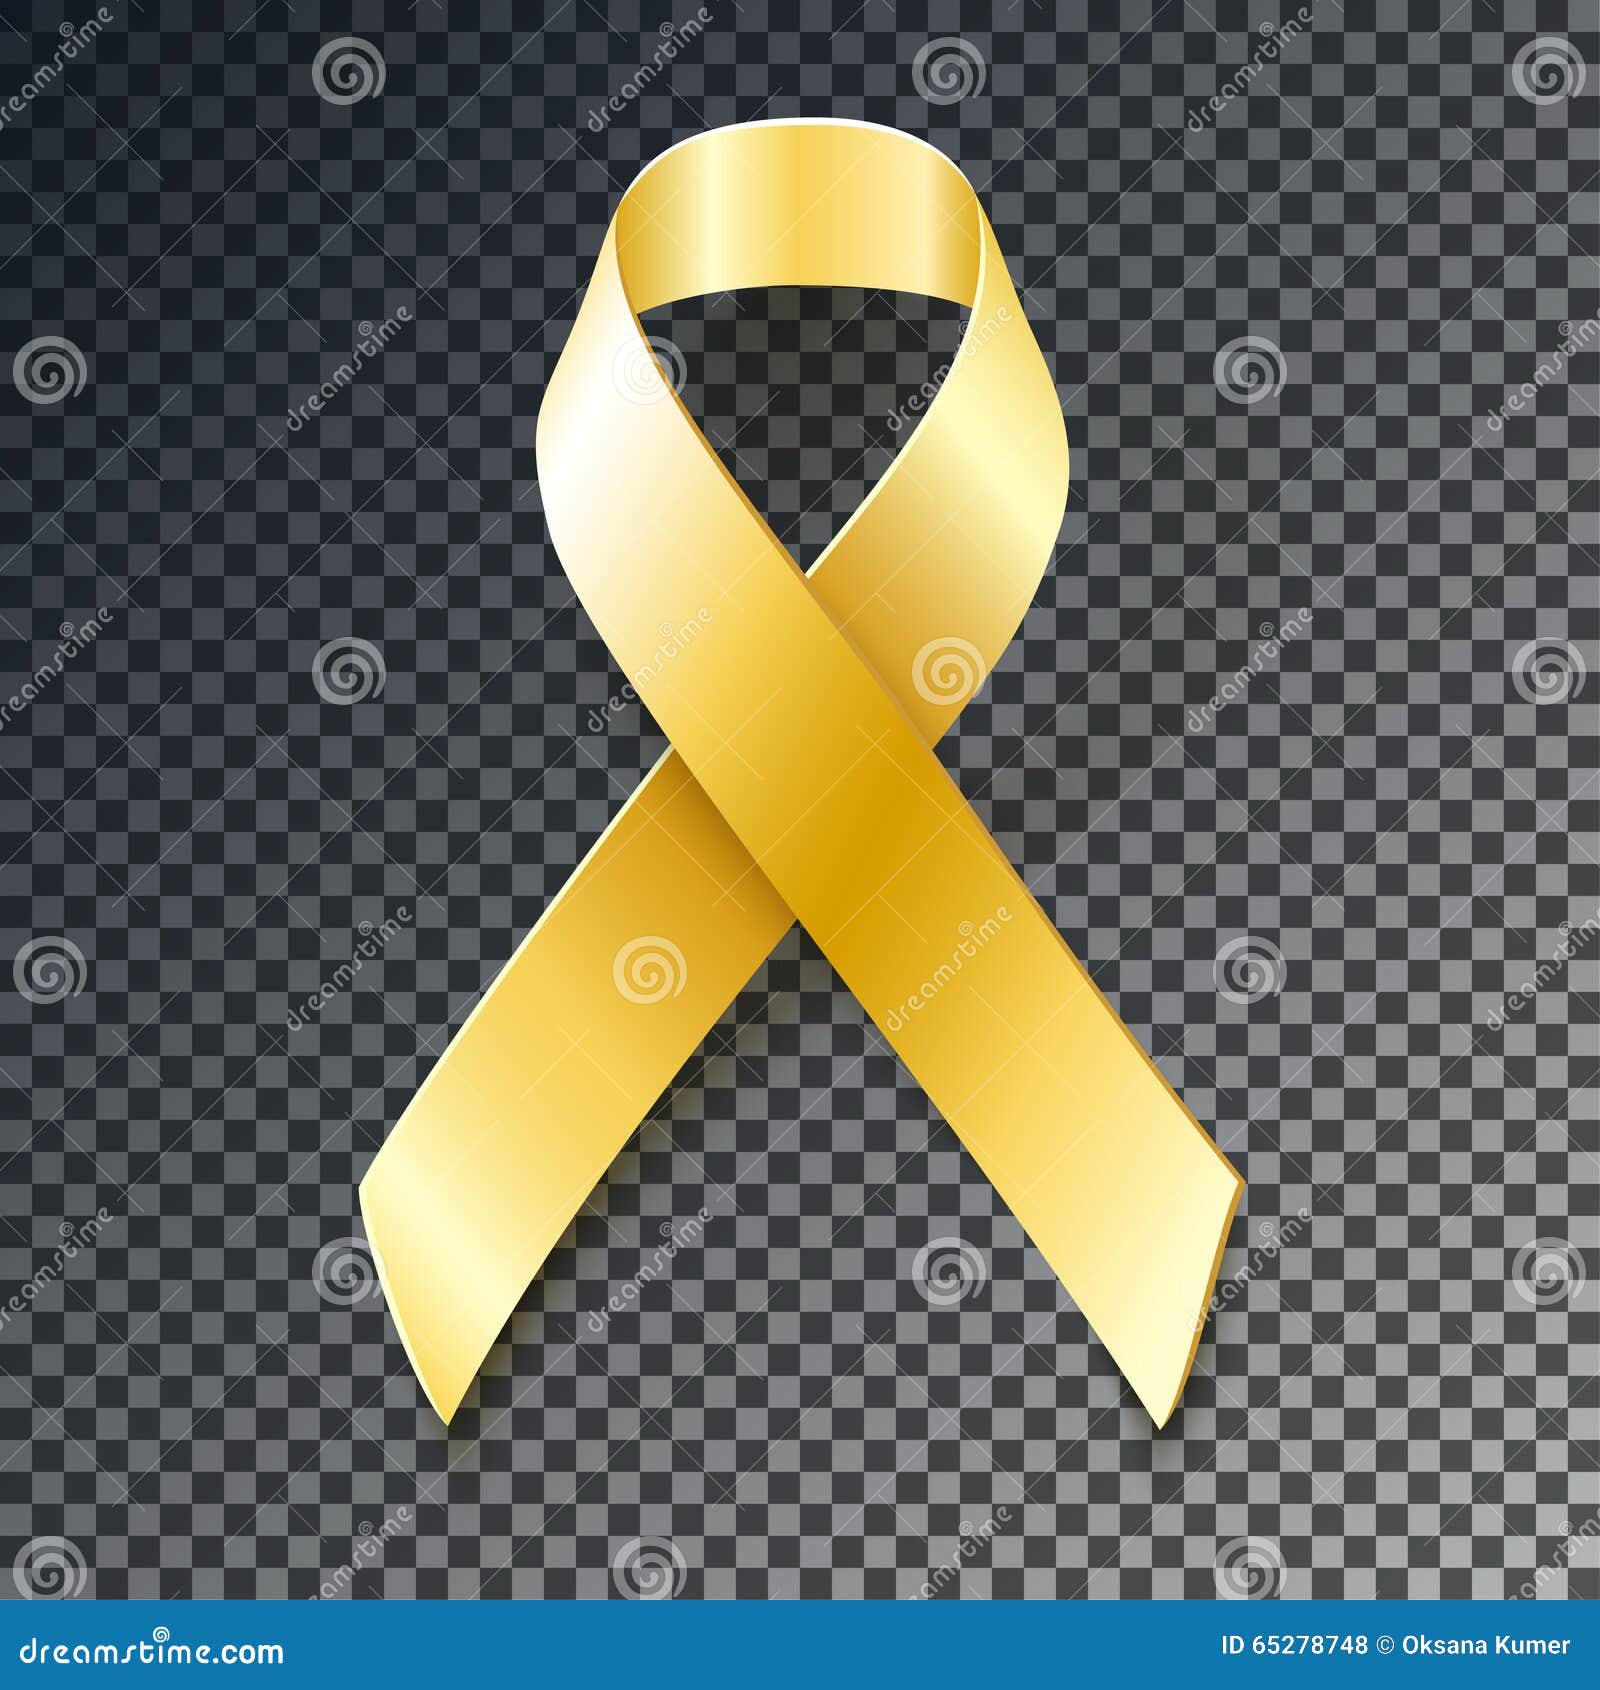 childhood cancer awareness gold ribbon